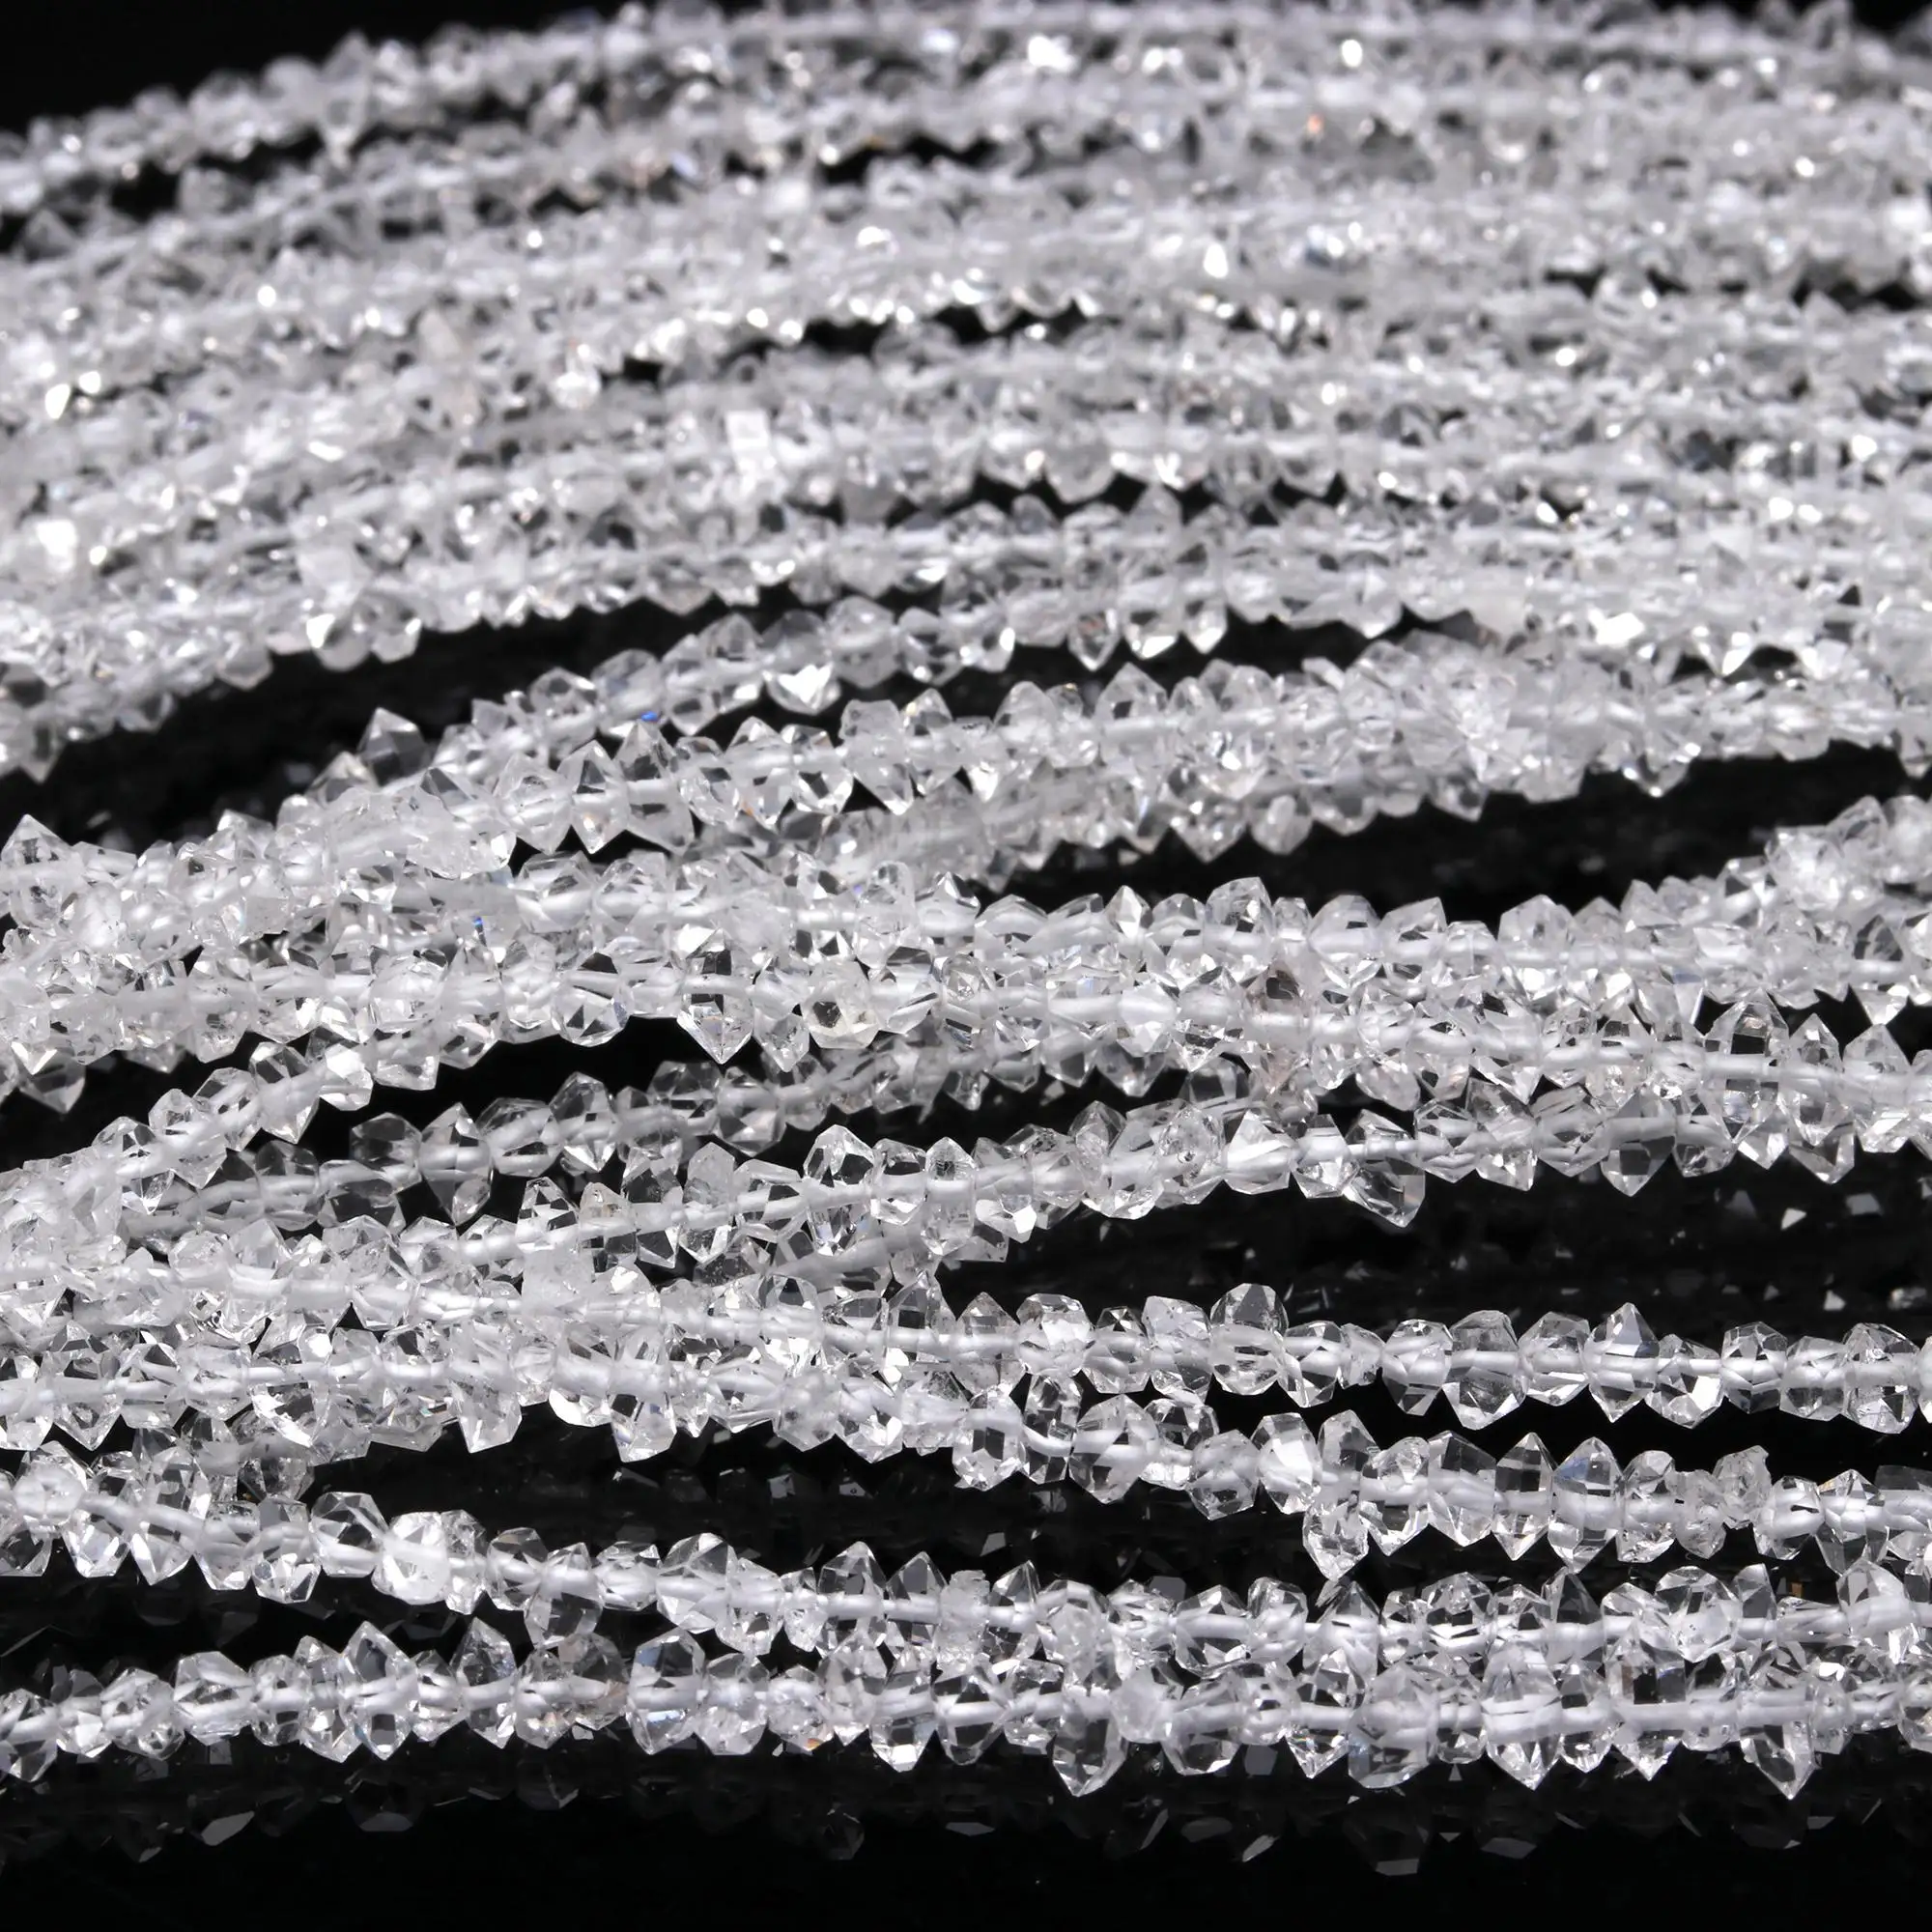 AAA+ DRILLED HERKIMER DIAMOND 3 - 4 mm CRYSTAL BEADS Natural Raw Clear Herkimer Diamond Drilled Quartz Jewelry Making Beads